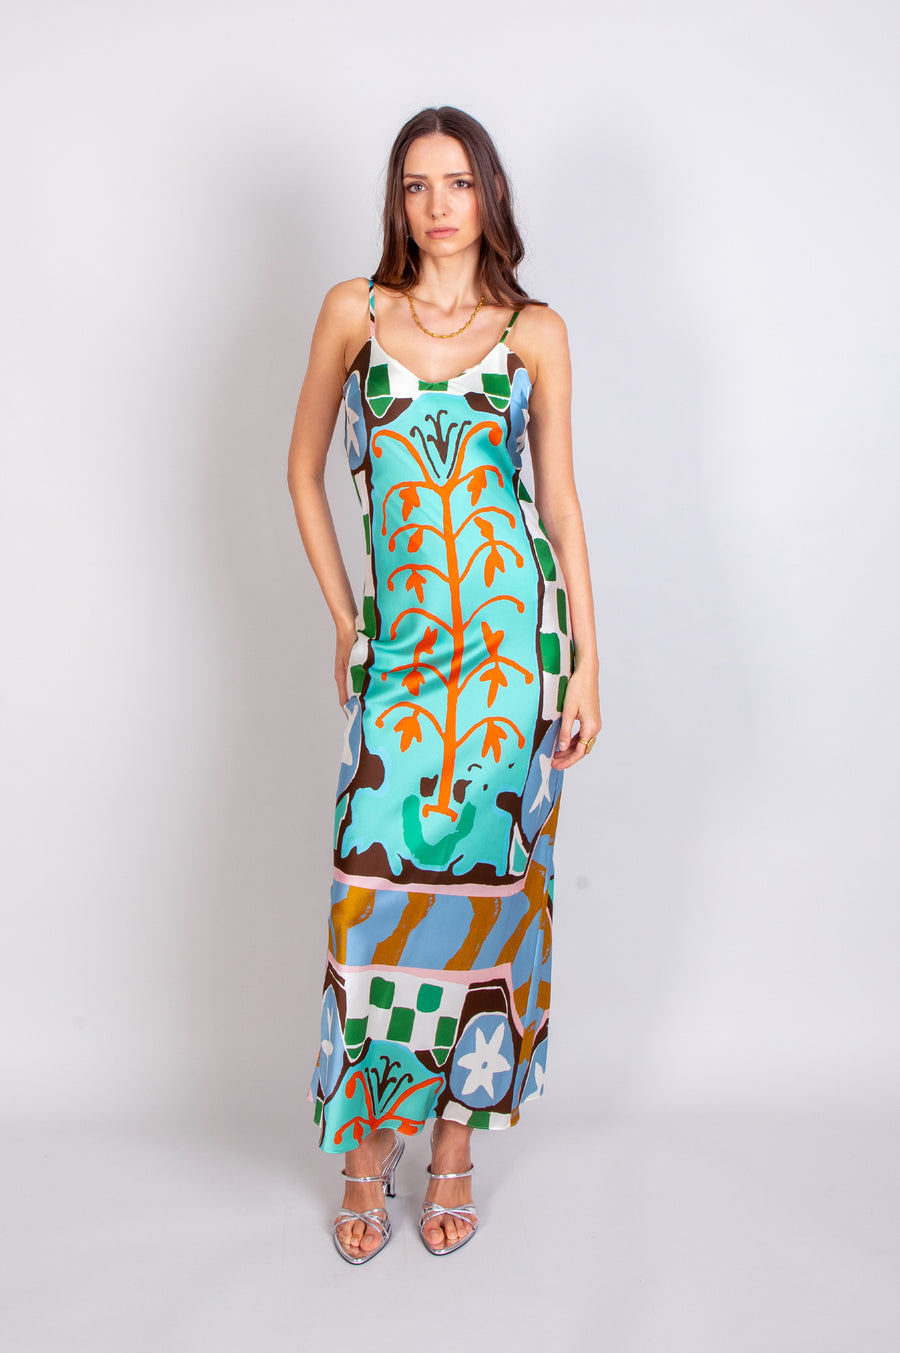 hand painted kantha sunrise placement print silk maxi slip dress